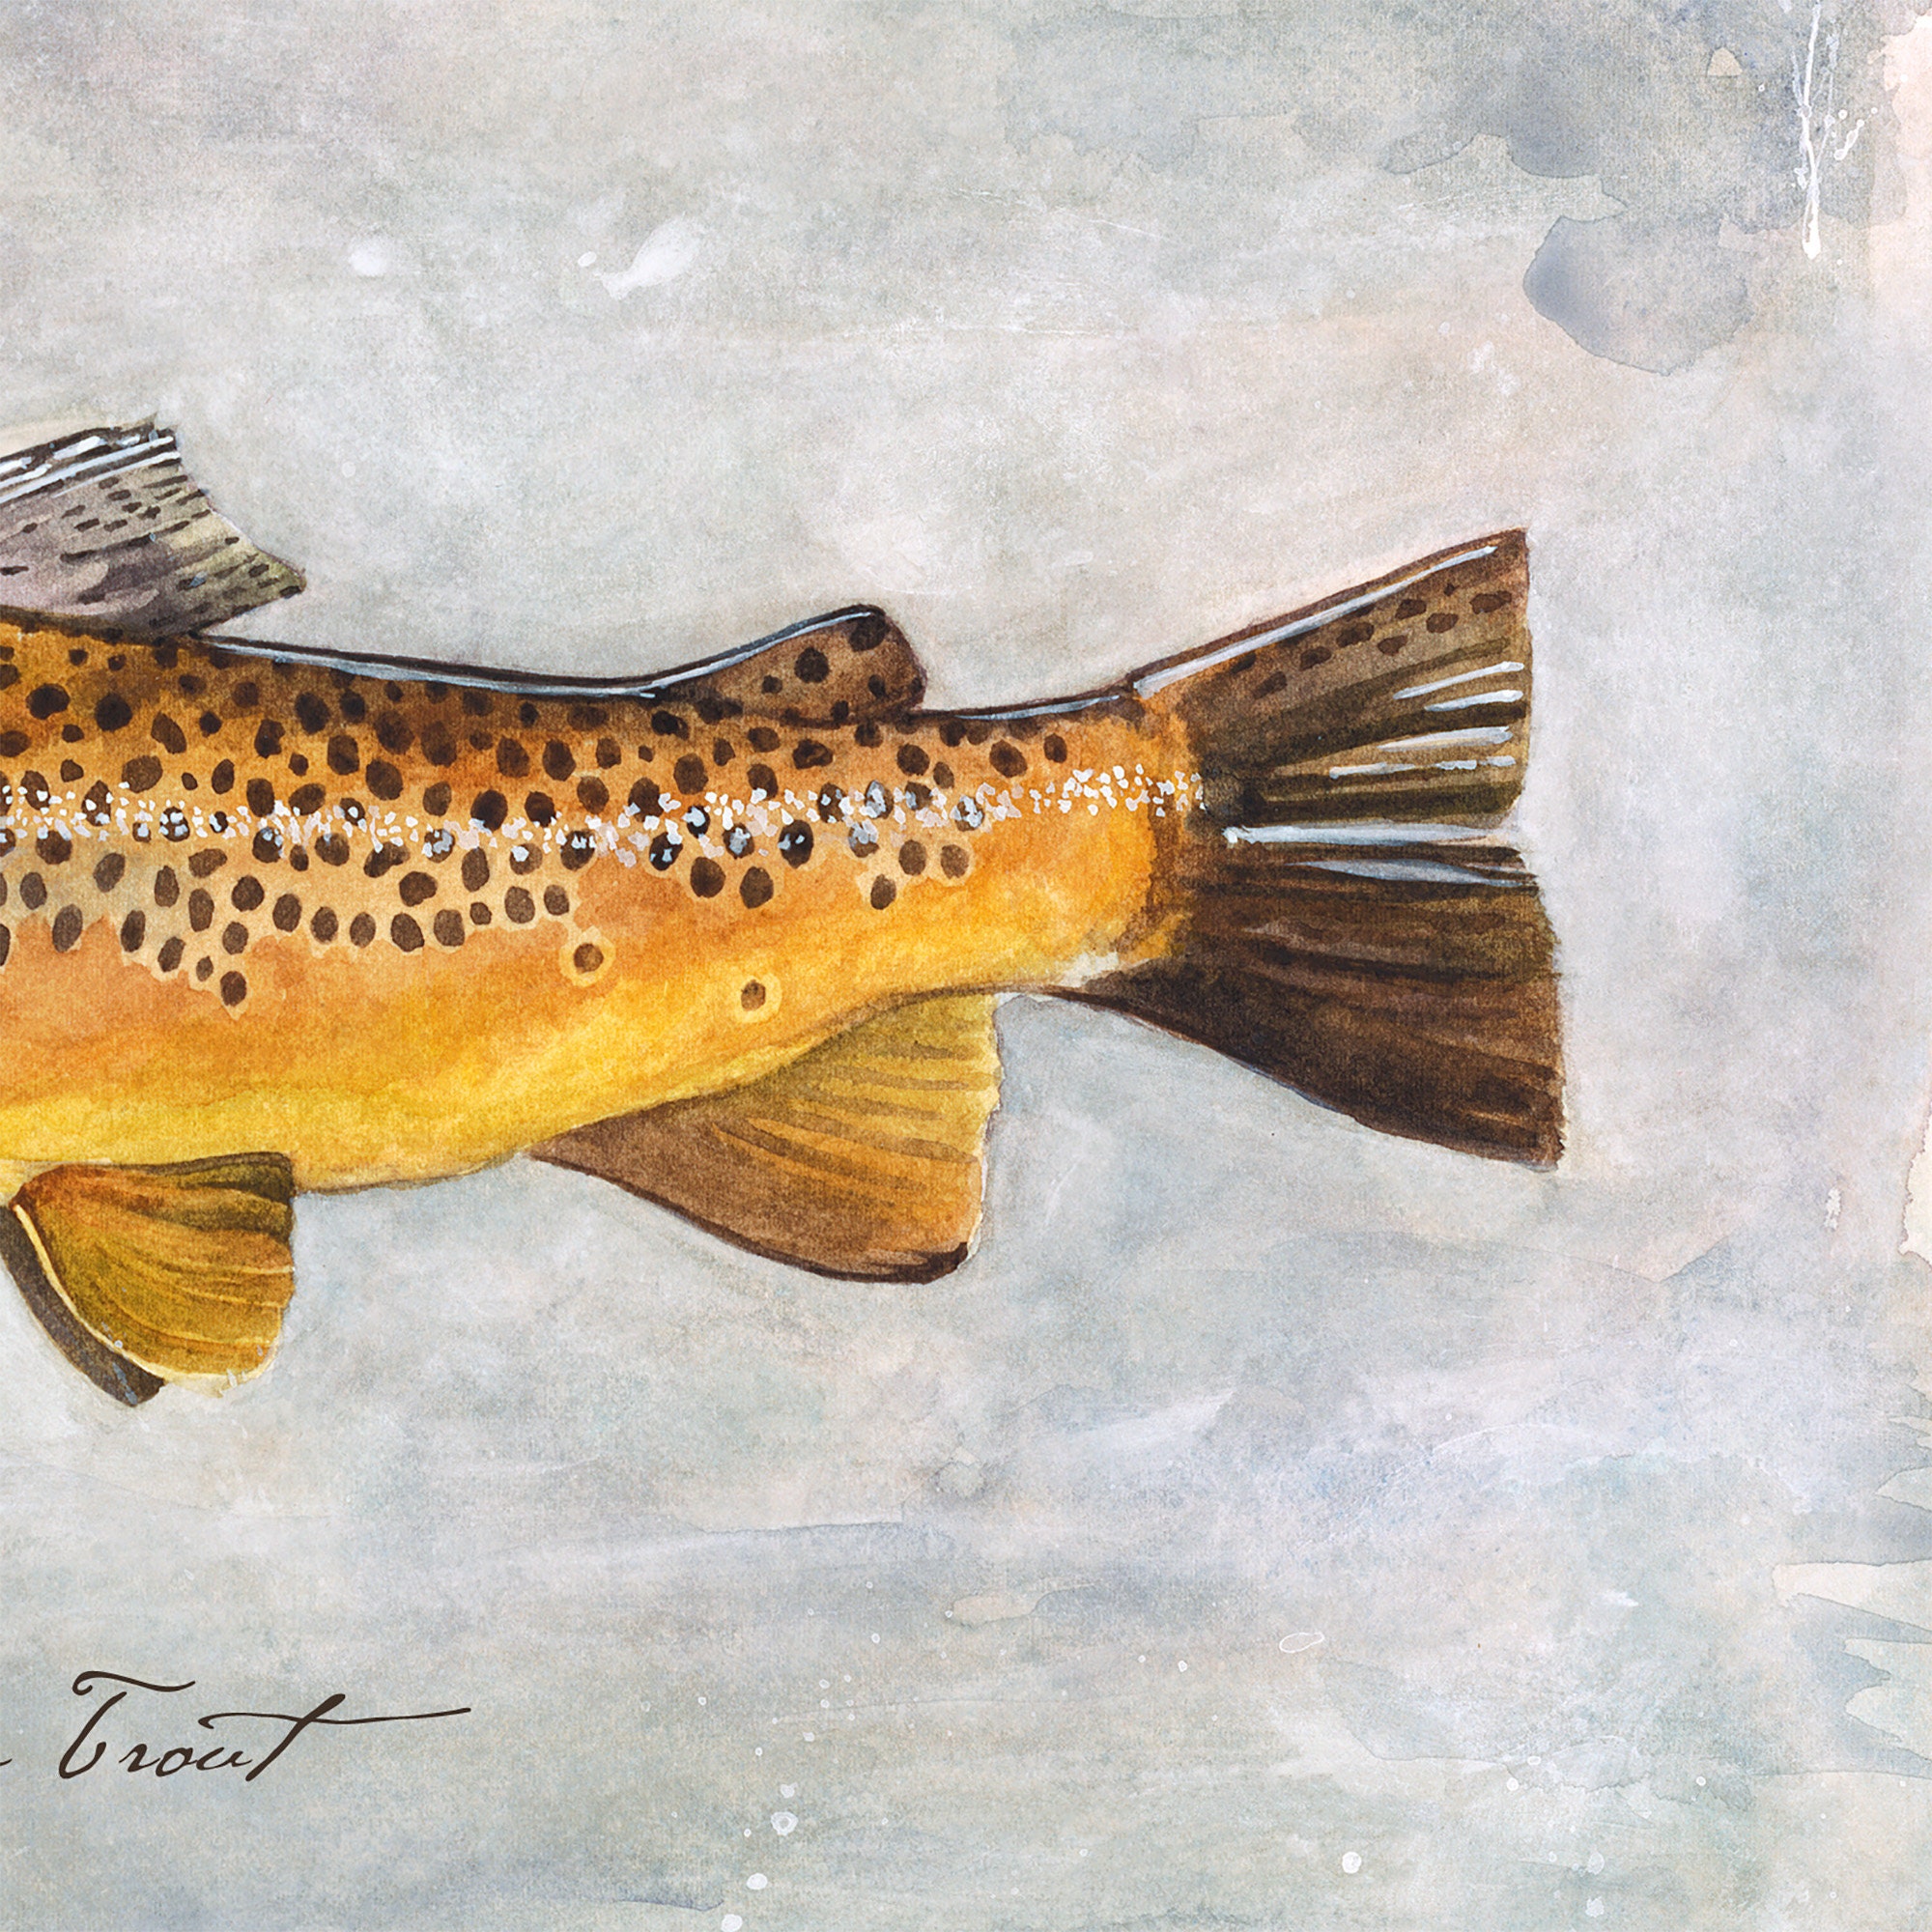 Brown Trout Art, Watercolor Trout, Fly Fishing Art, Trout Print, Lake House  Decor, Cabin Decor, Rustic Cabin Decor, Trout Watercolor 